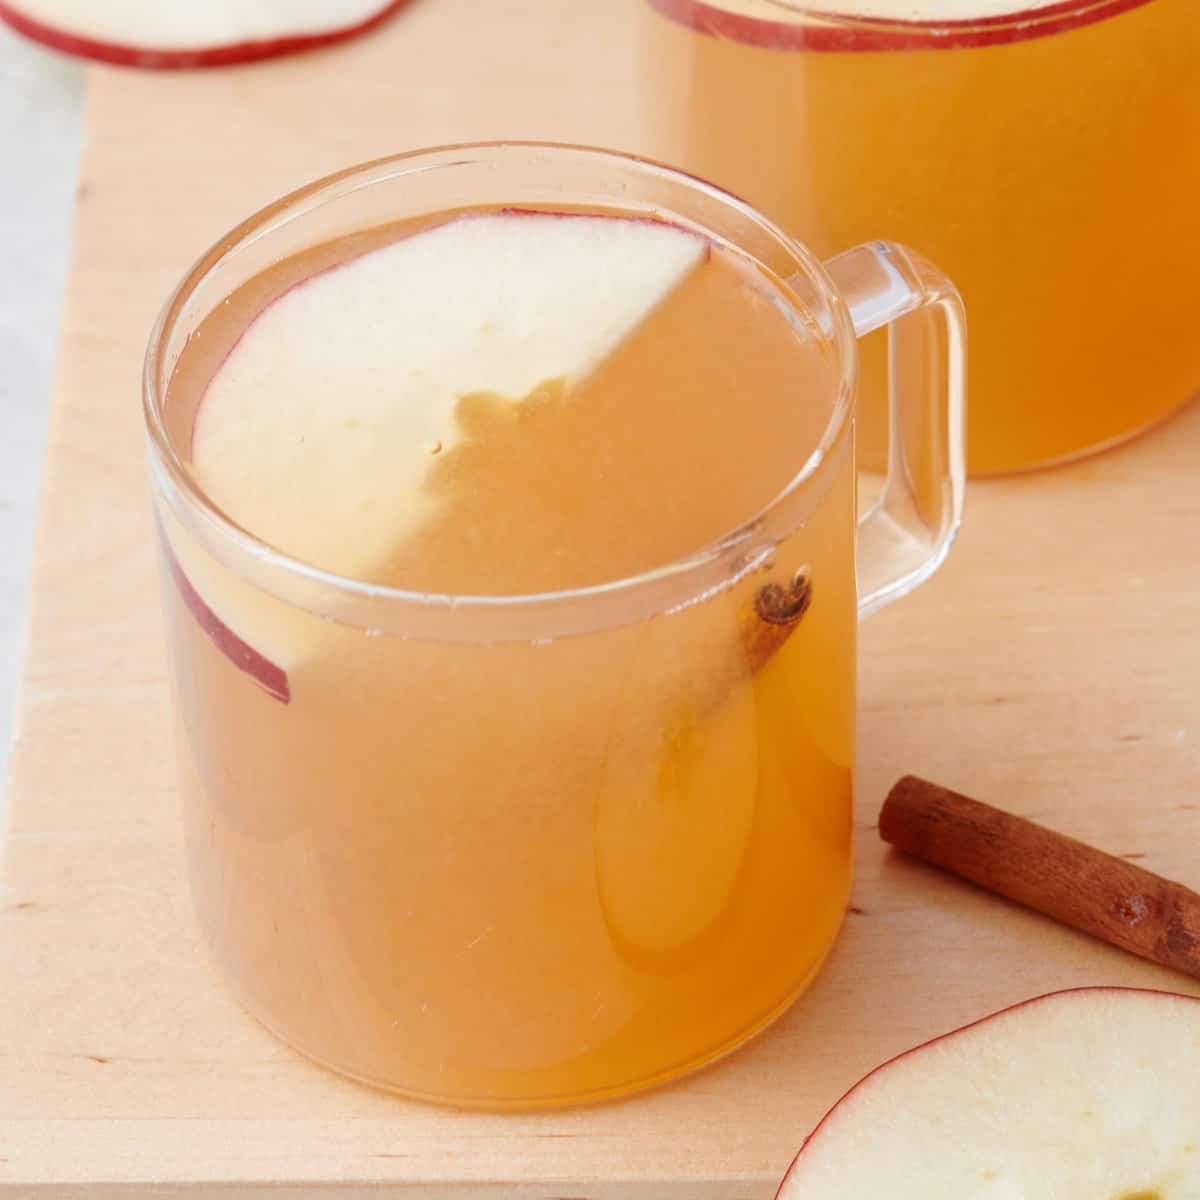 Homemade apple cider in a glass mug.